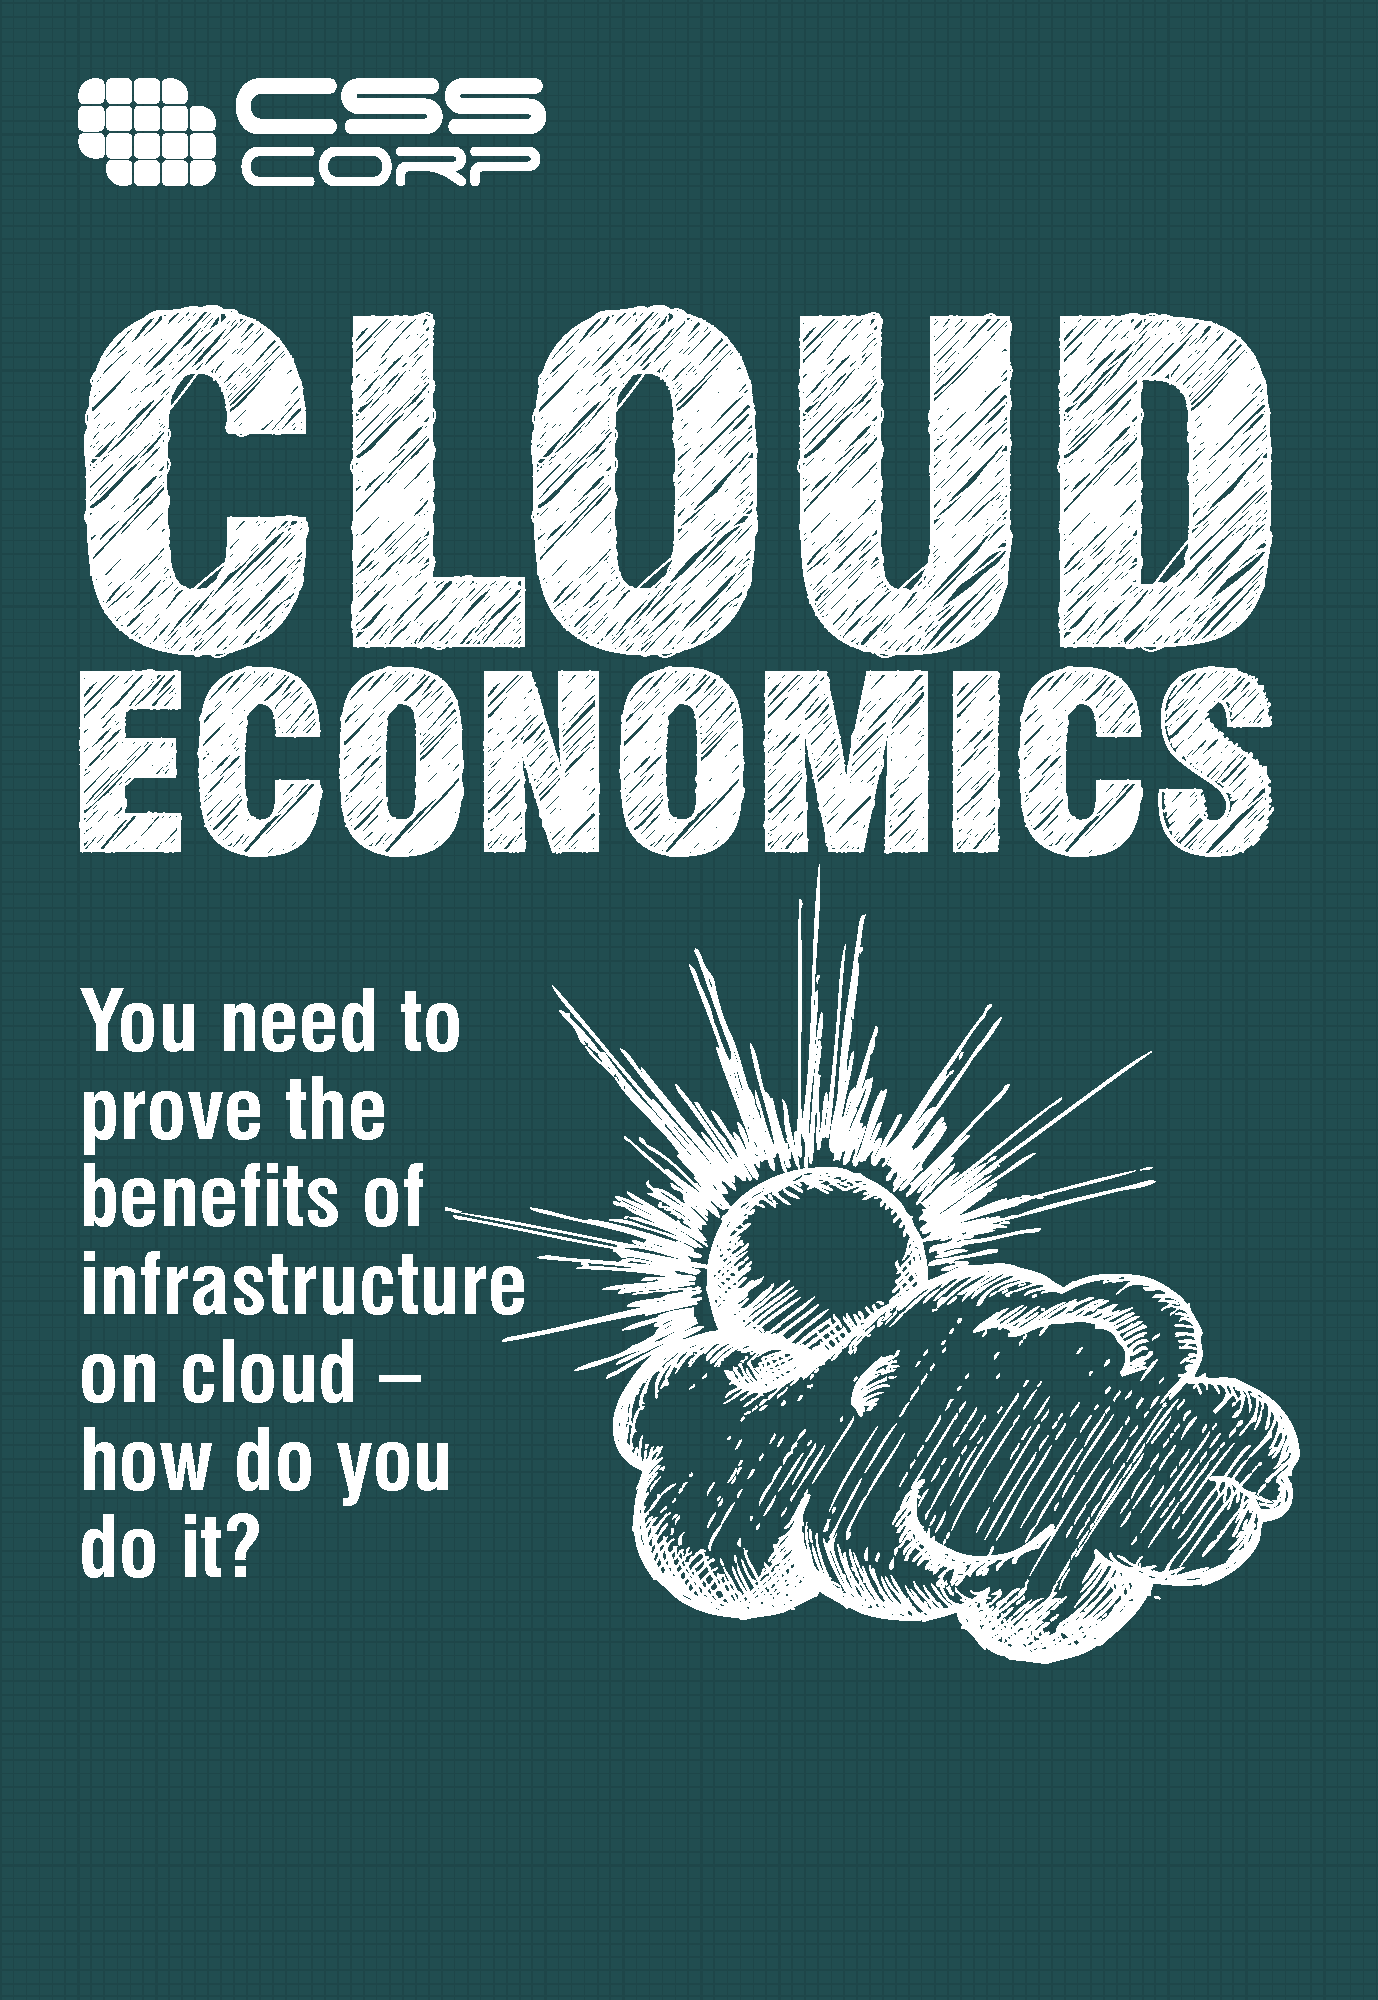 Cloud Economics